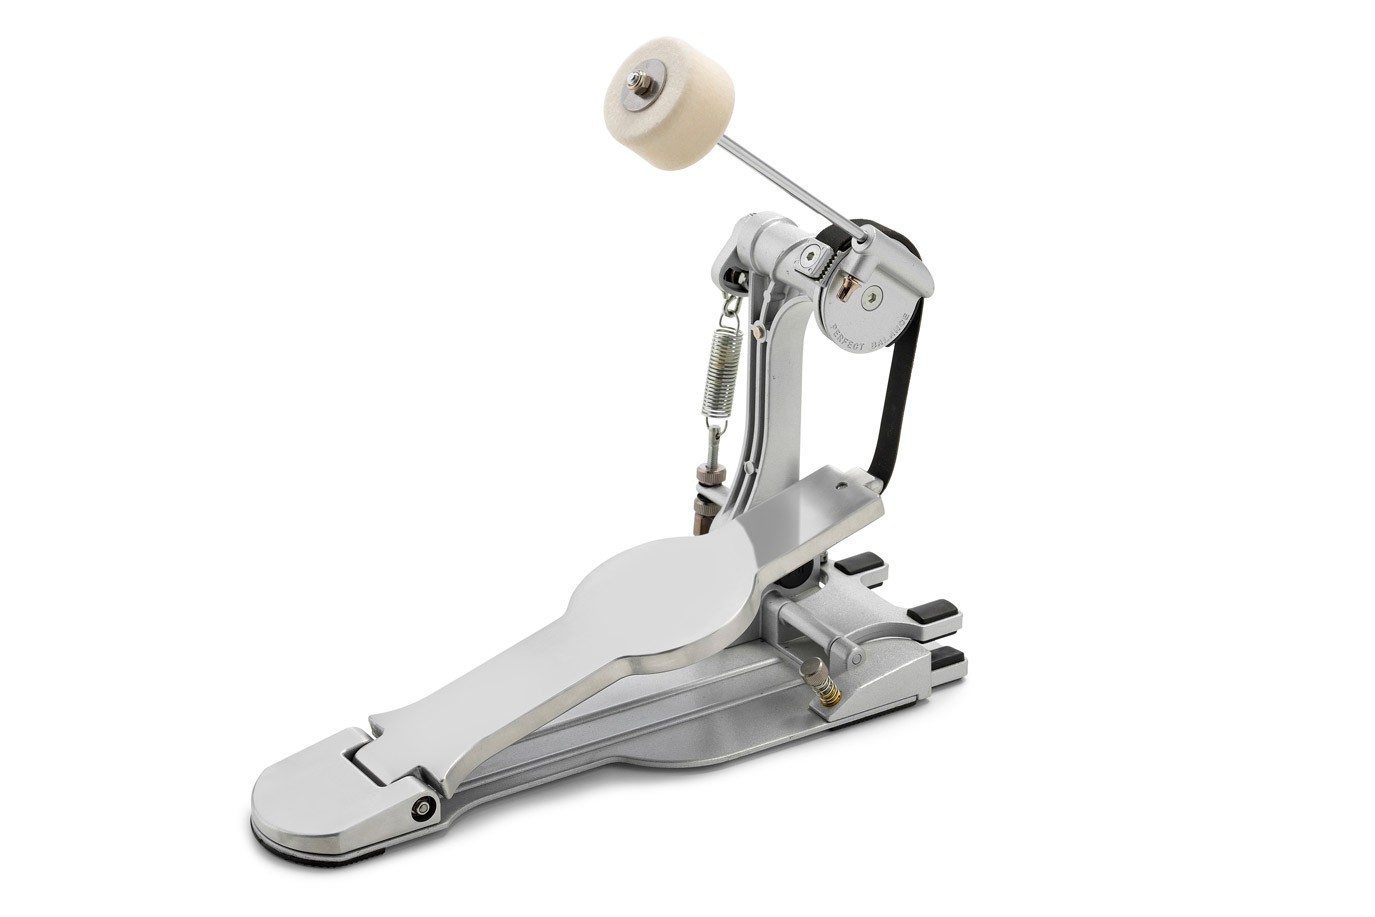 Sonor PB Perfect Balance Pedal designed by Jojo Mayer